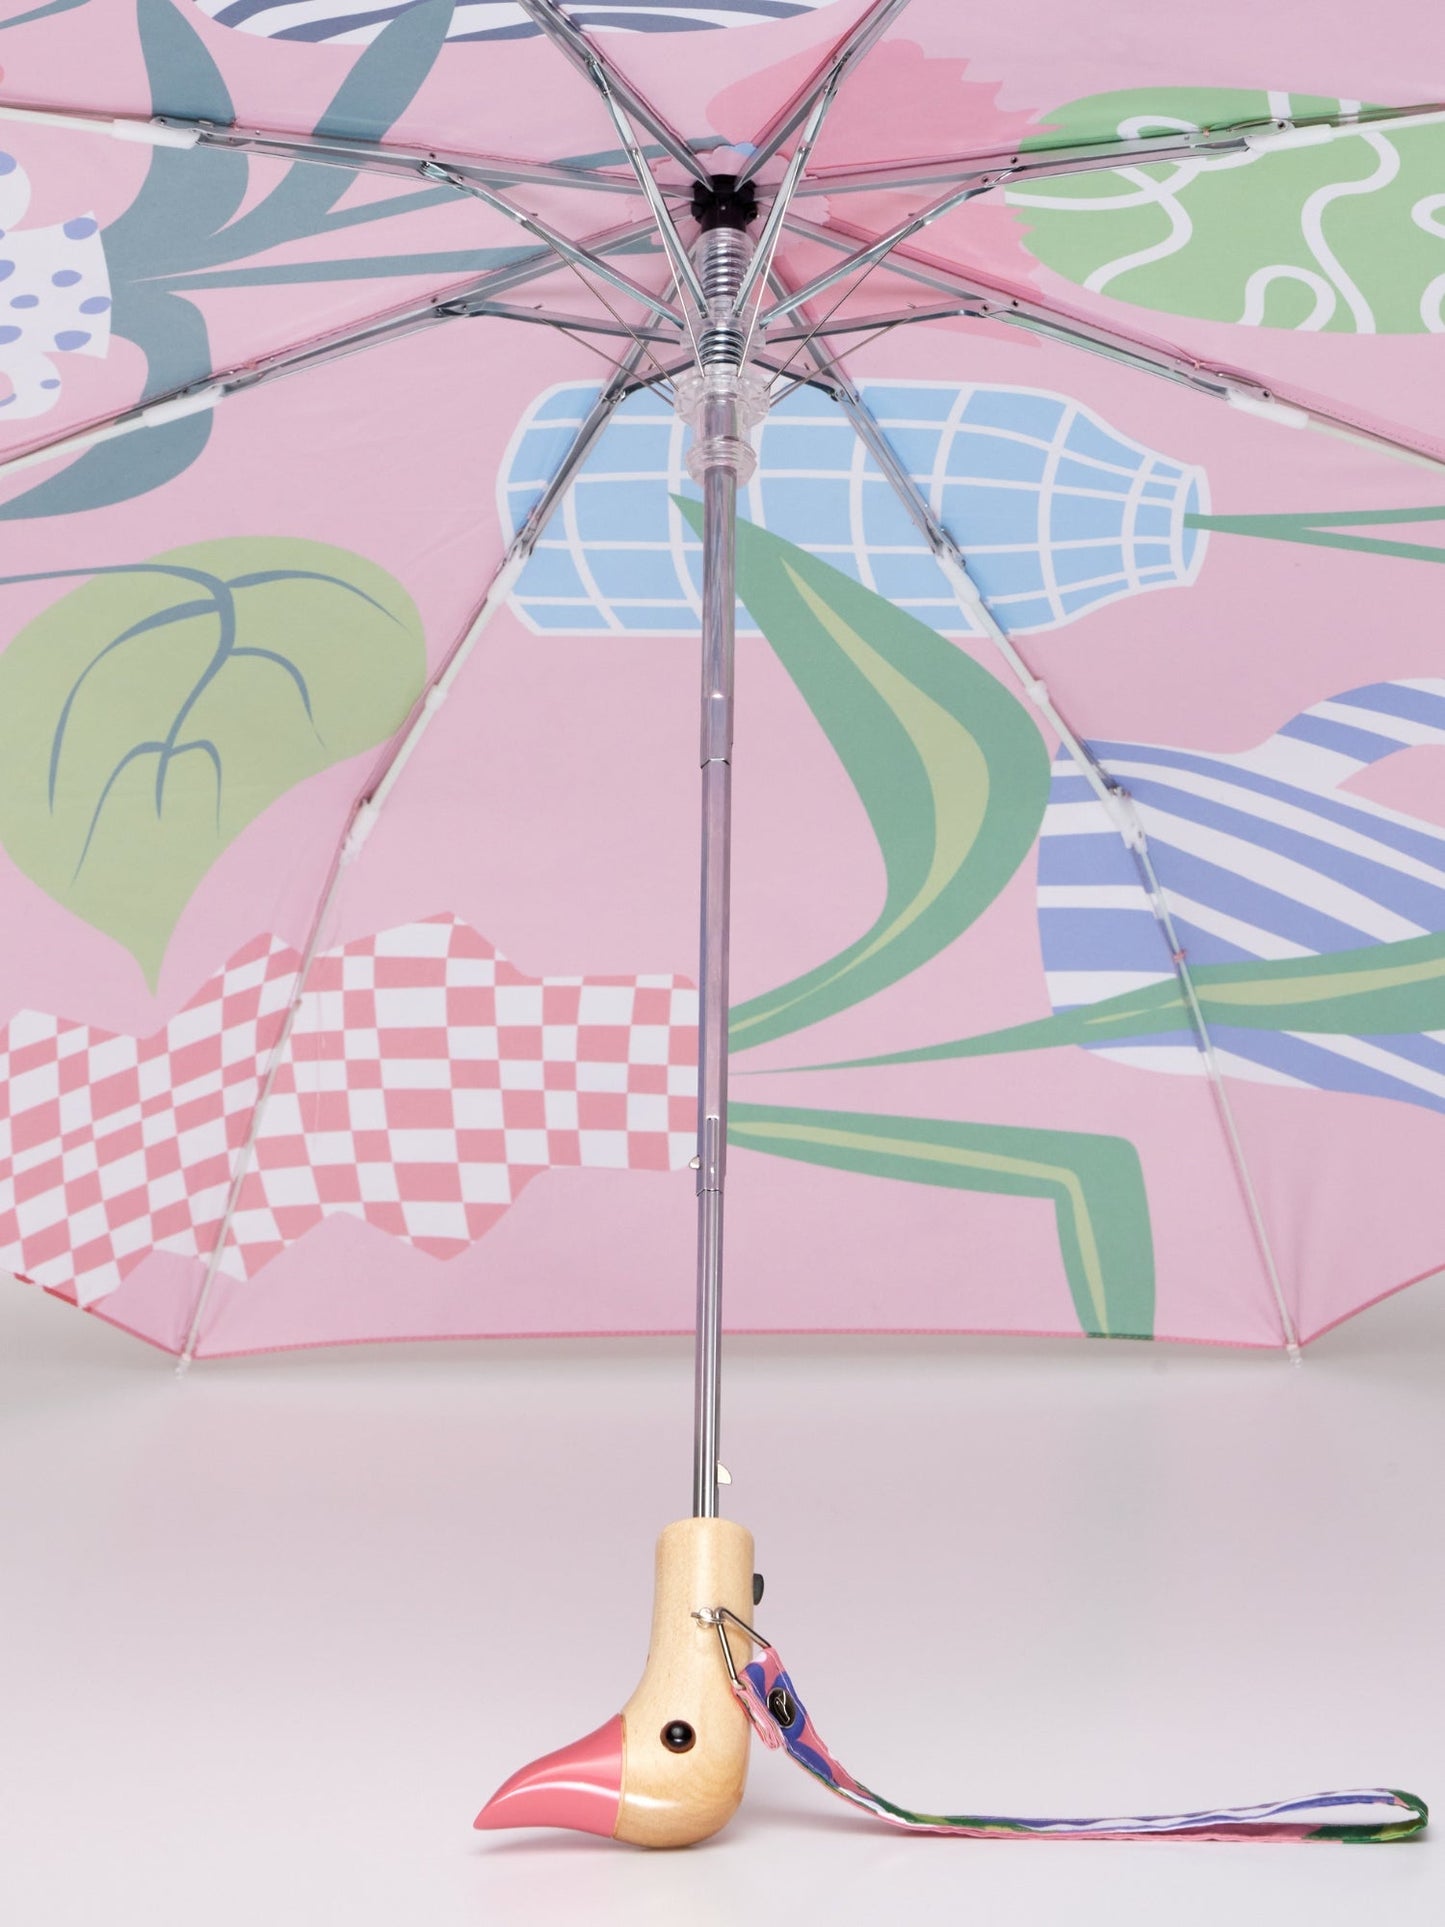 ORIGINAL DUCKHEAD Compact Umbrella in Vases available at Lahn.shop